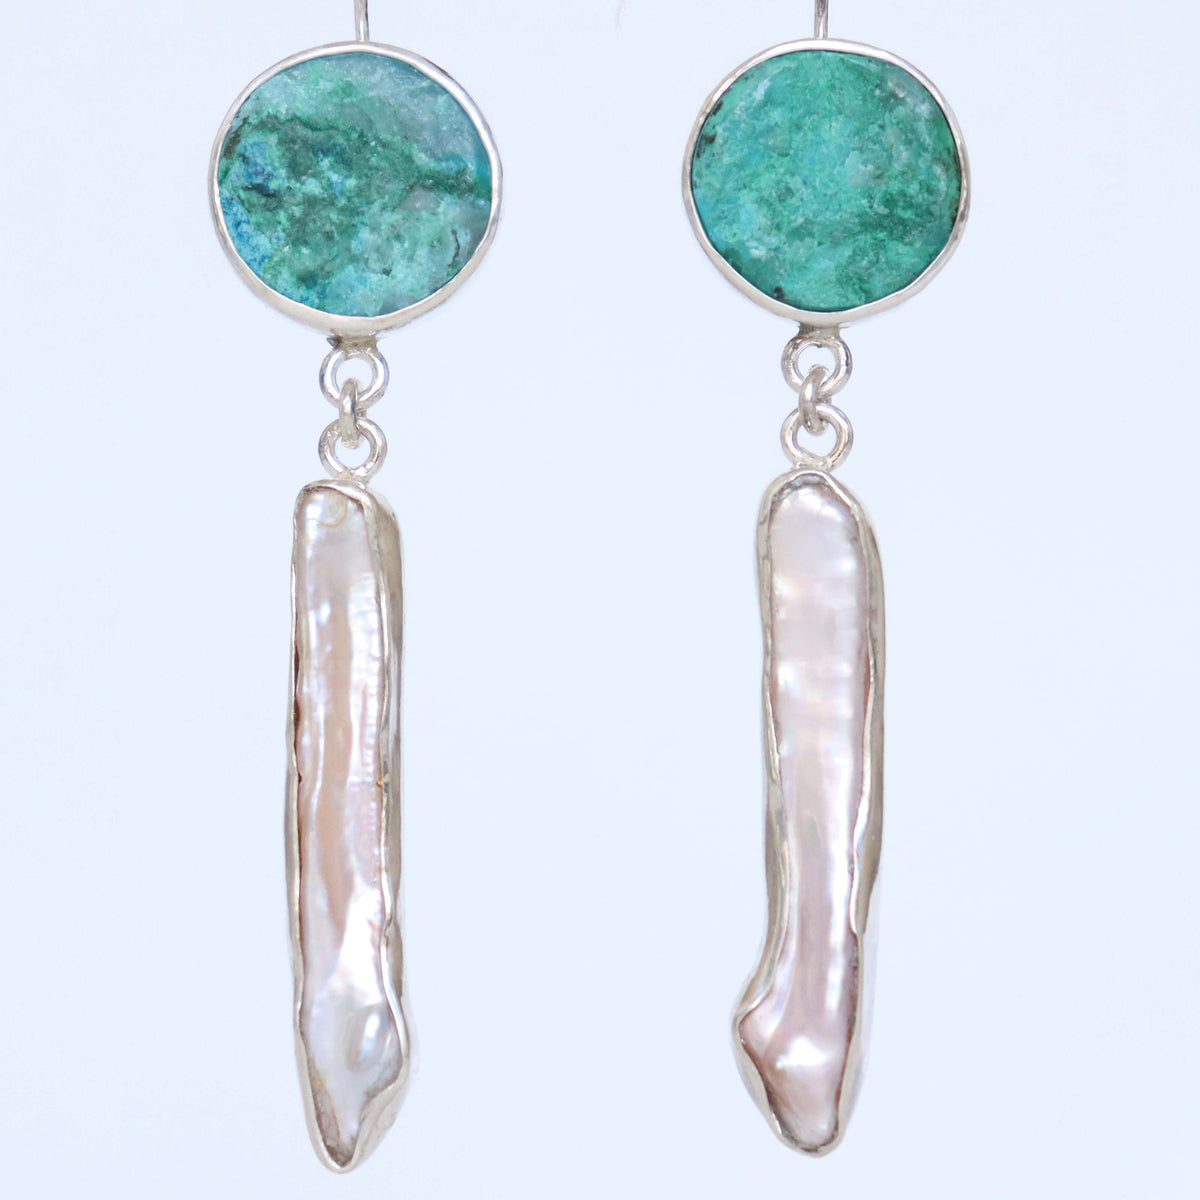 chrysocolla and pearl dangle earrings in silver versatile earrings, handmade by roffjewellery.com